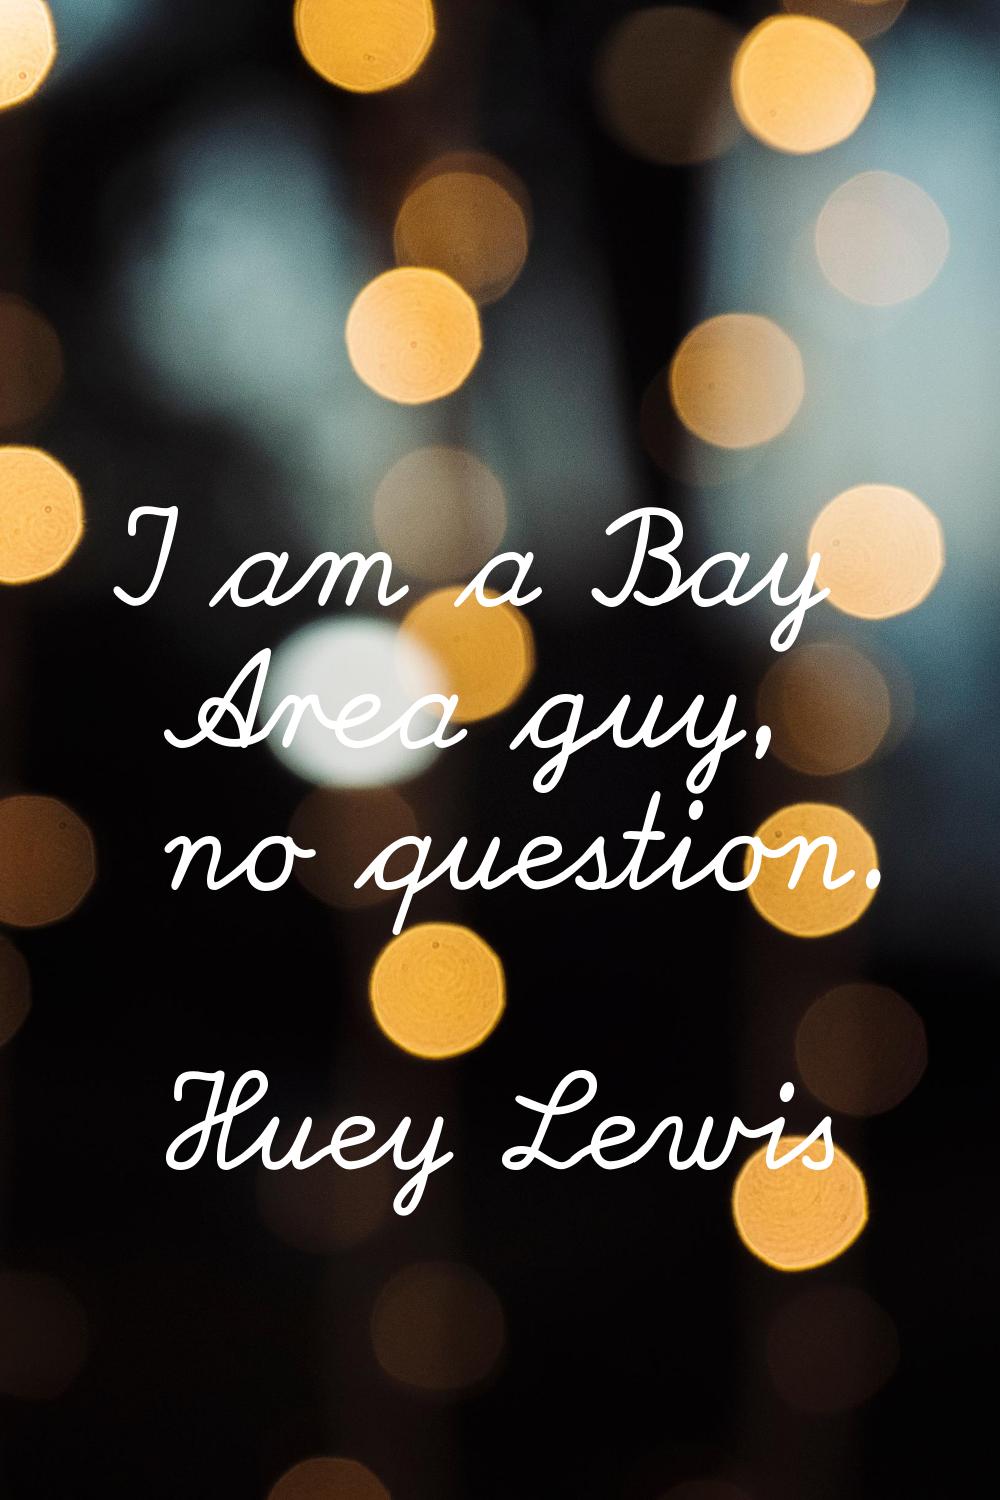 I am a Bay Area guy, no question.